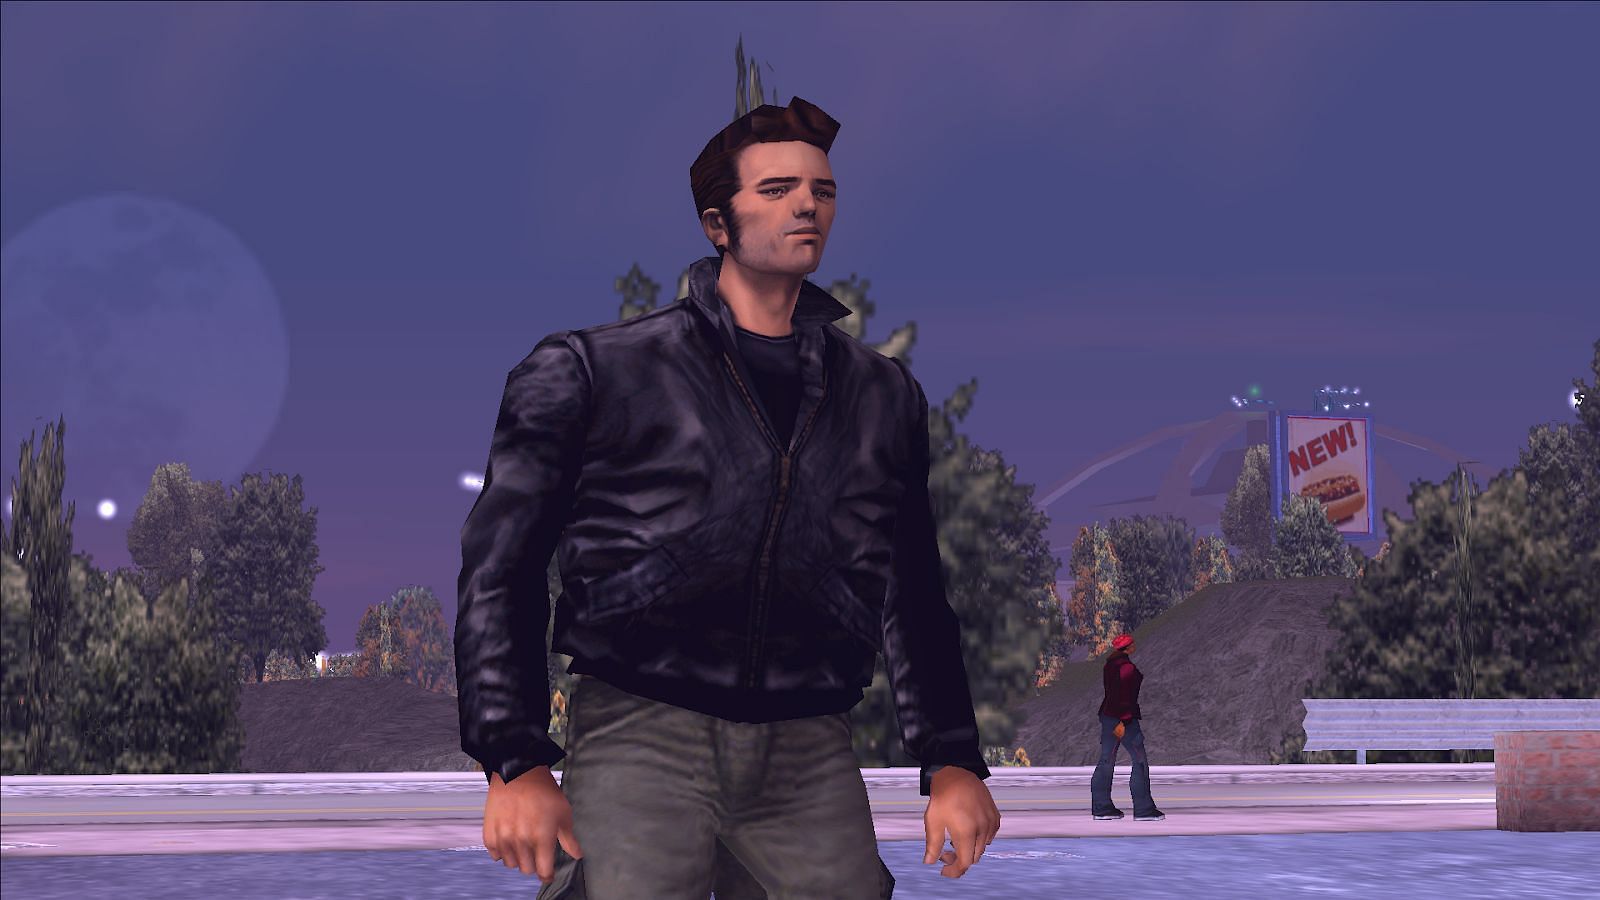 Claude was the original 3D protagonist, so nostalgic fans might love seeing him again (Image via Rockstar Games)